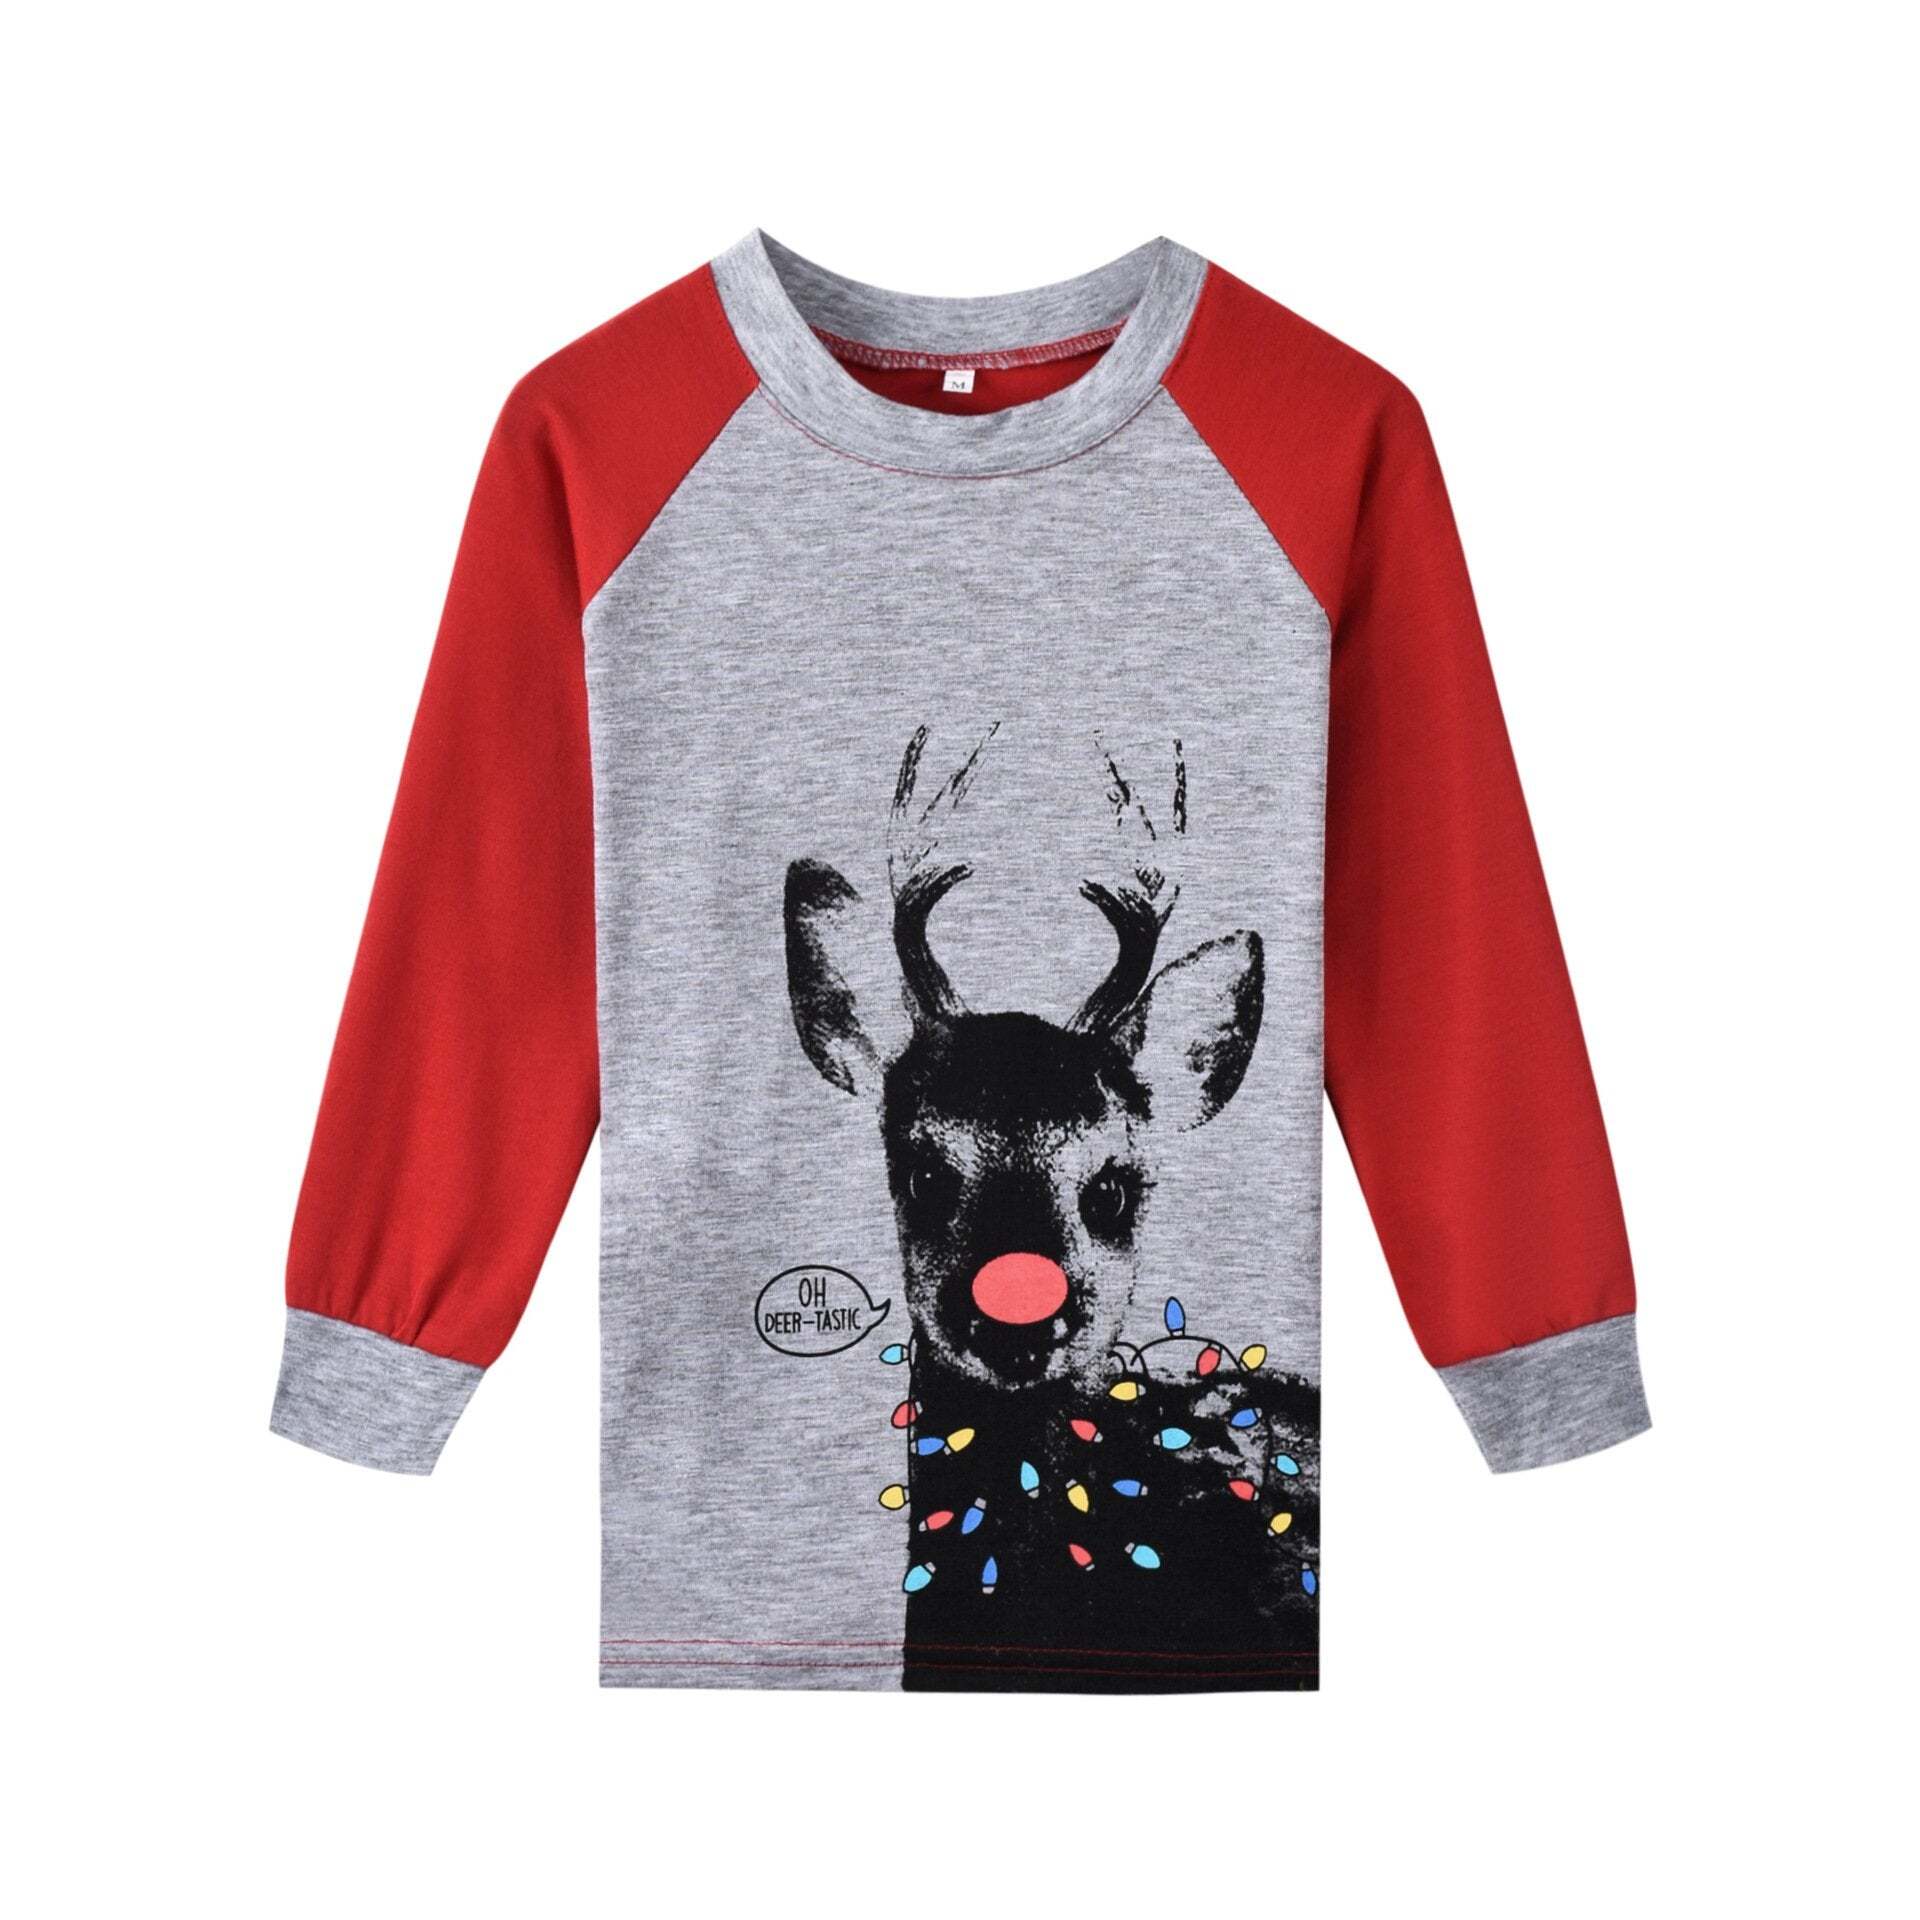 Family Matching Plaid Deer Print Christmas Pajamas Set(with Pet Dog Clothes)